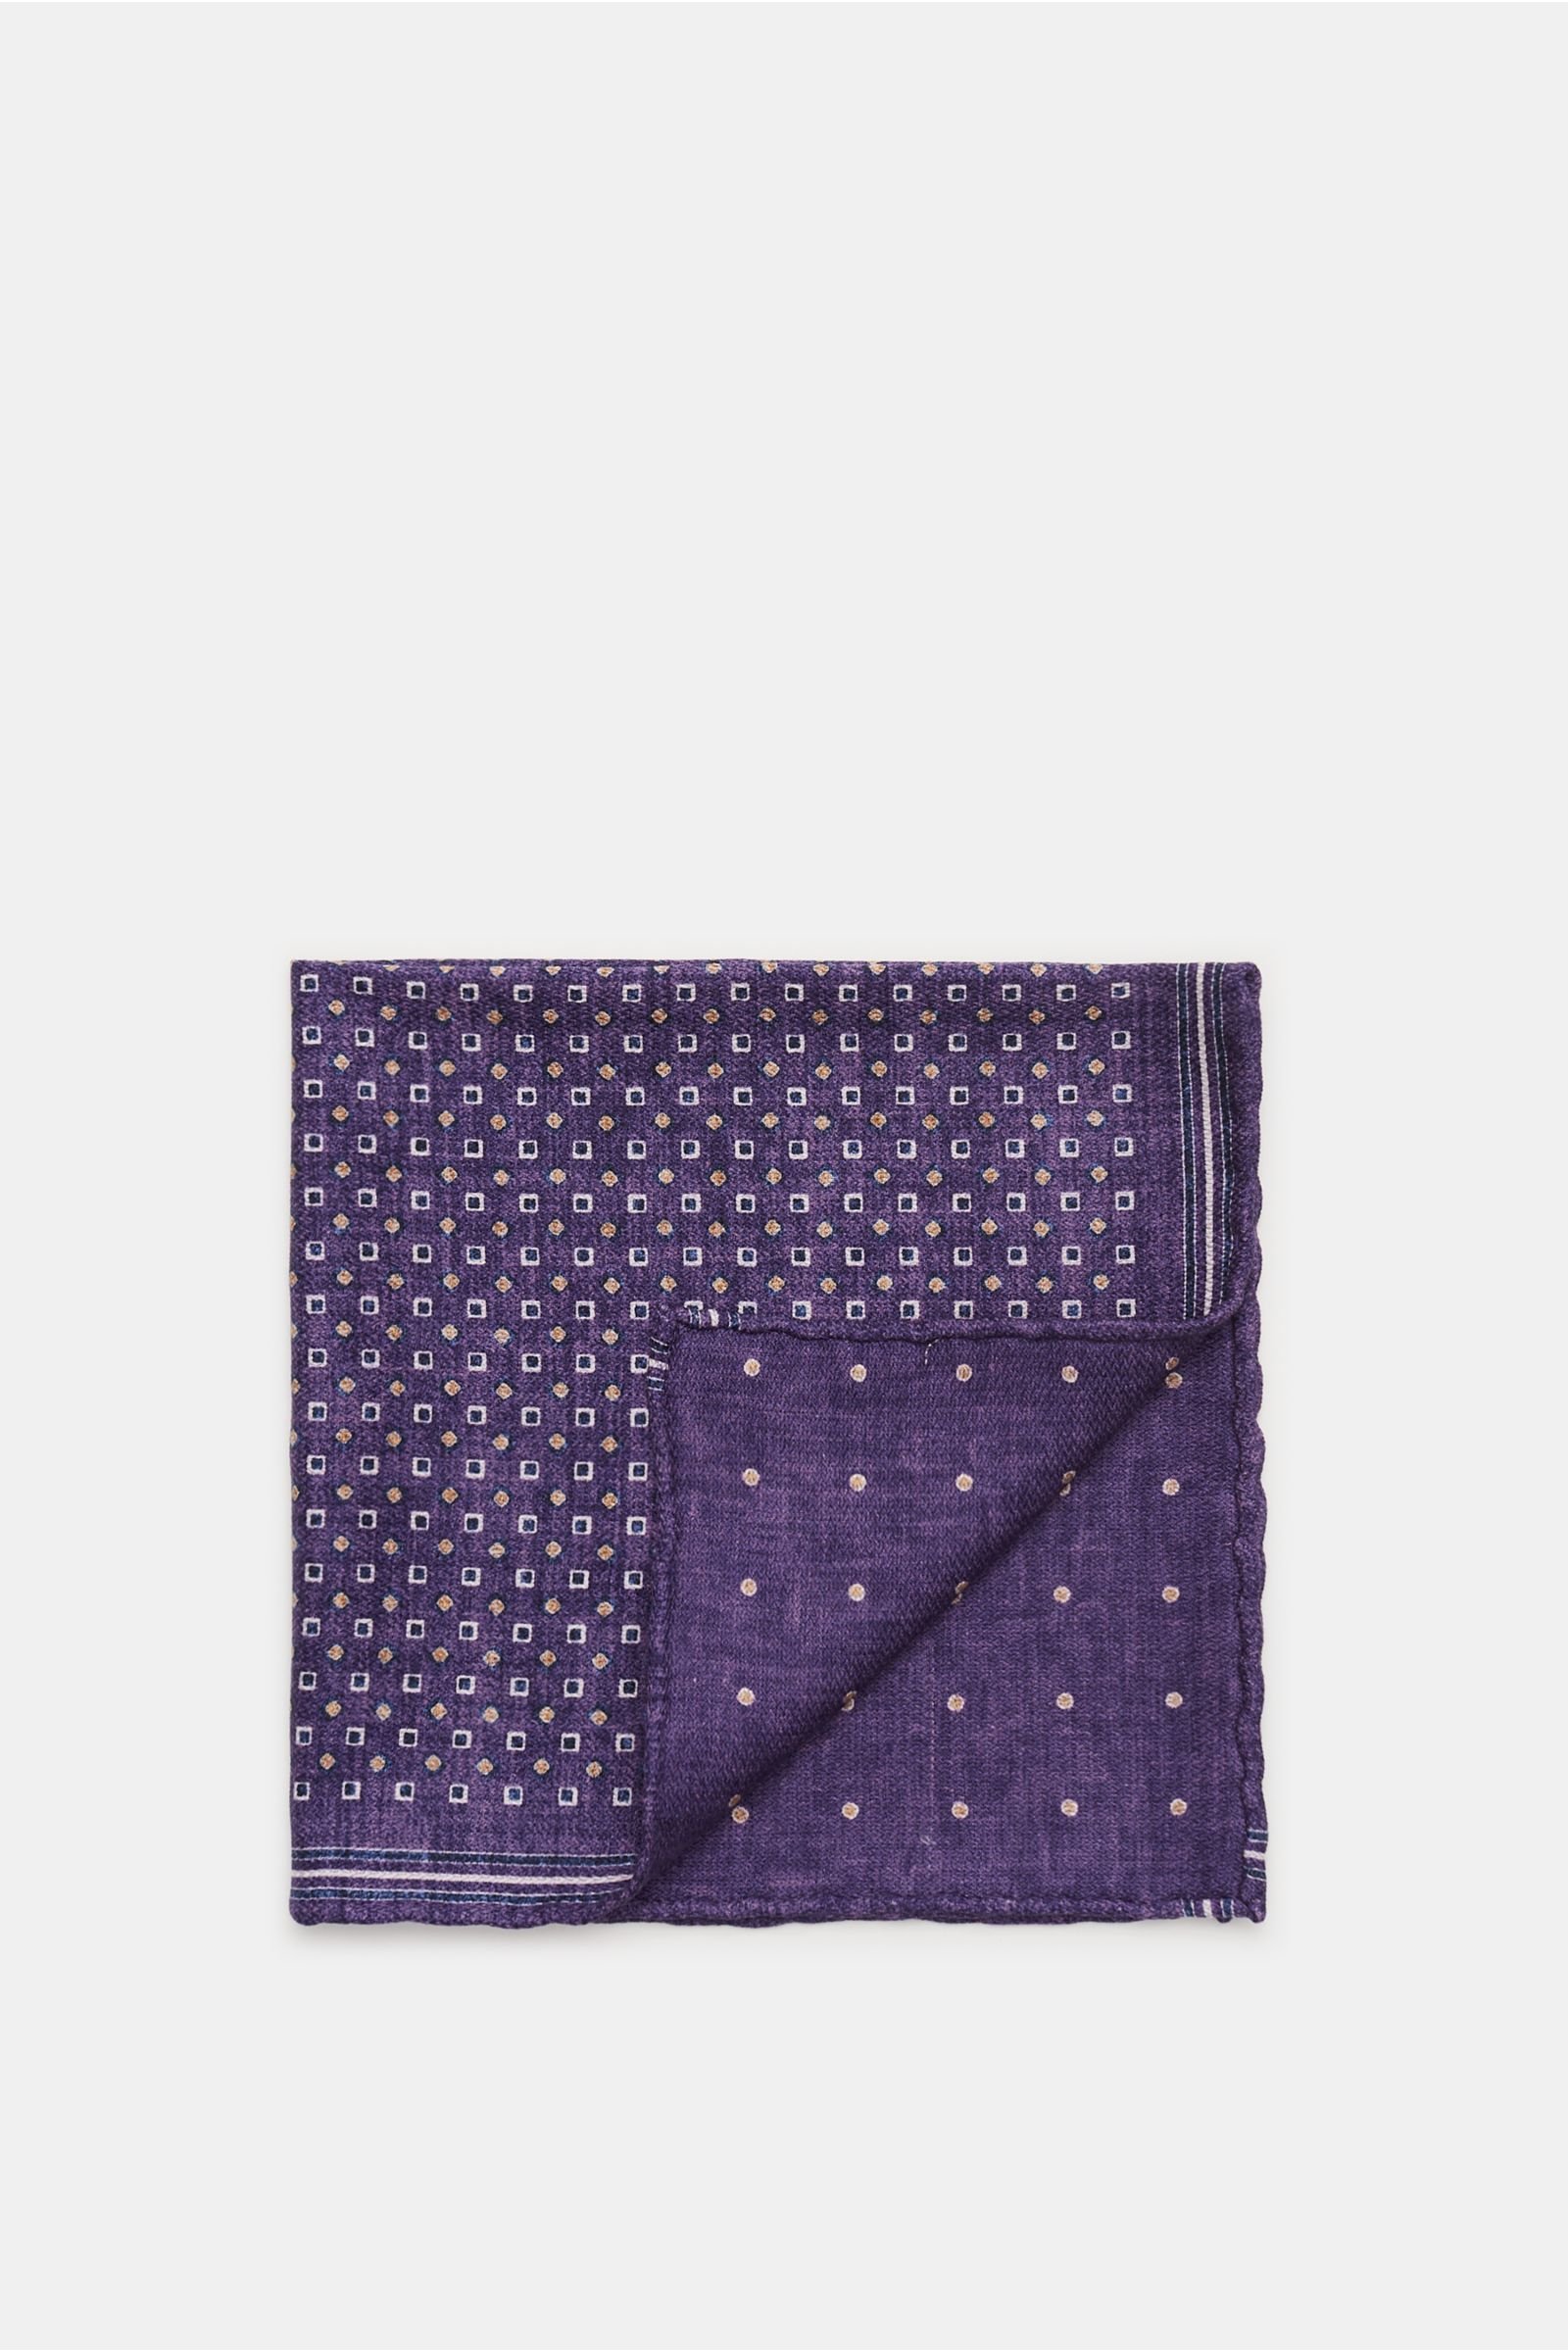 Pocket square purple/navy with polka dots